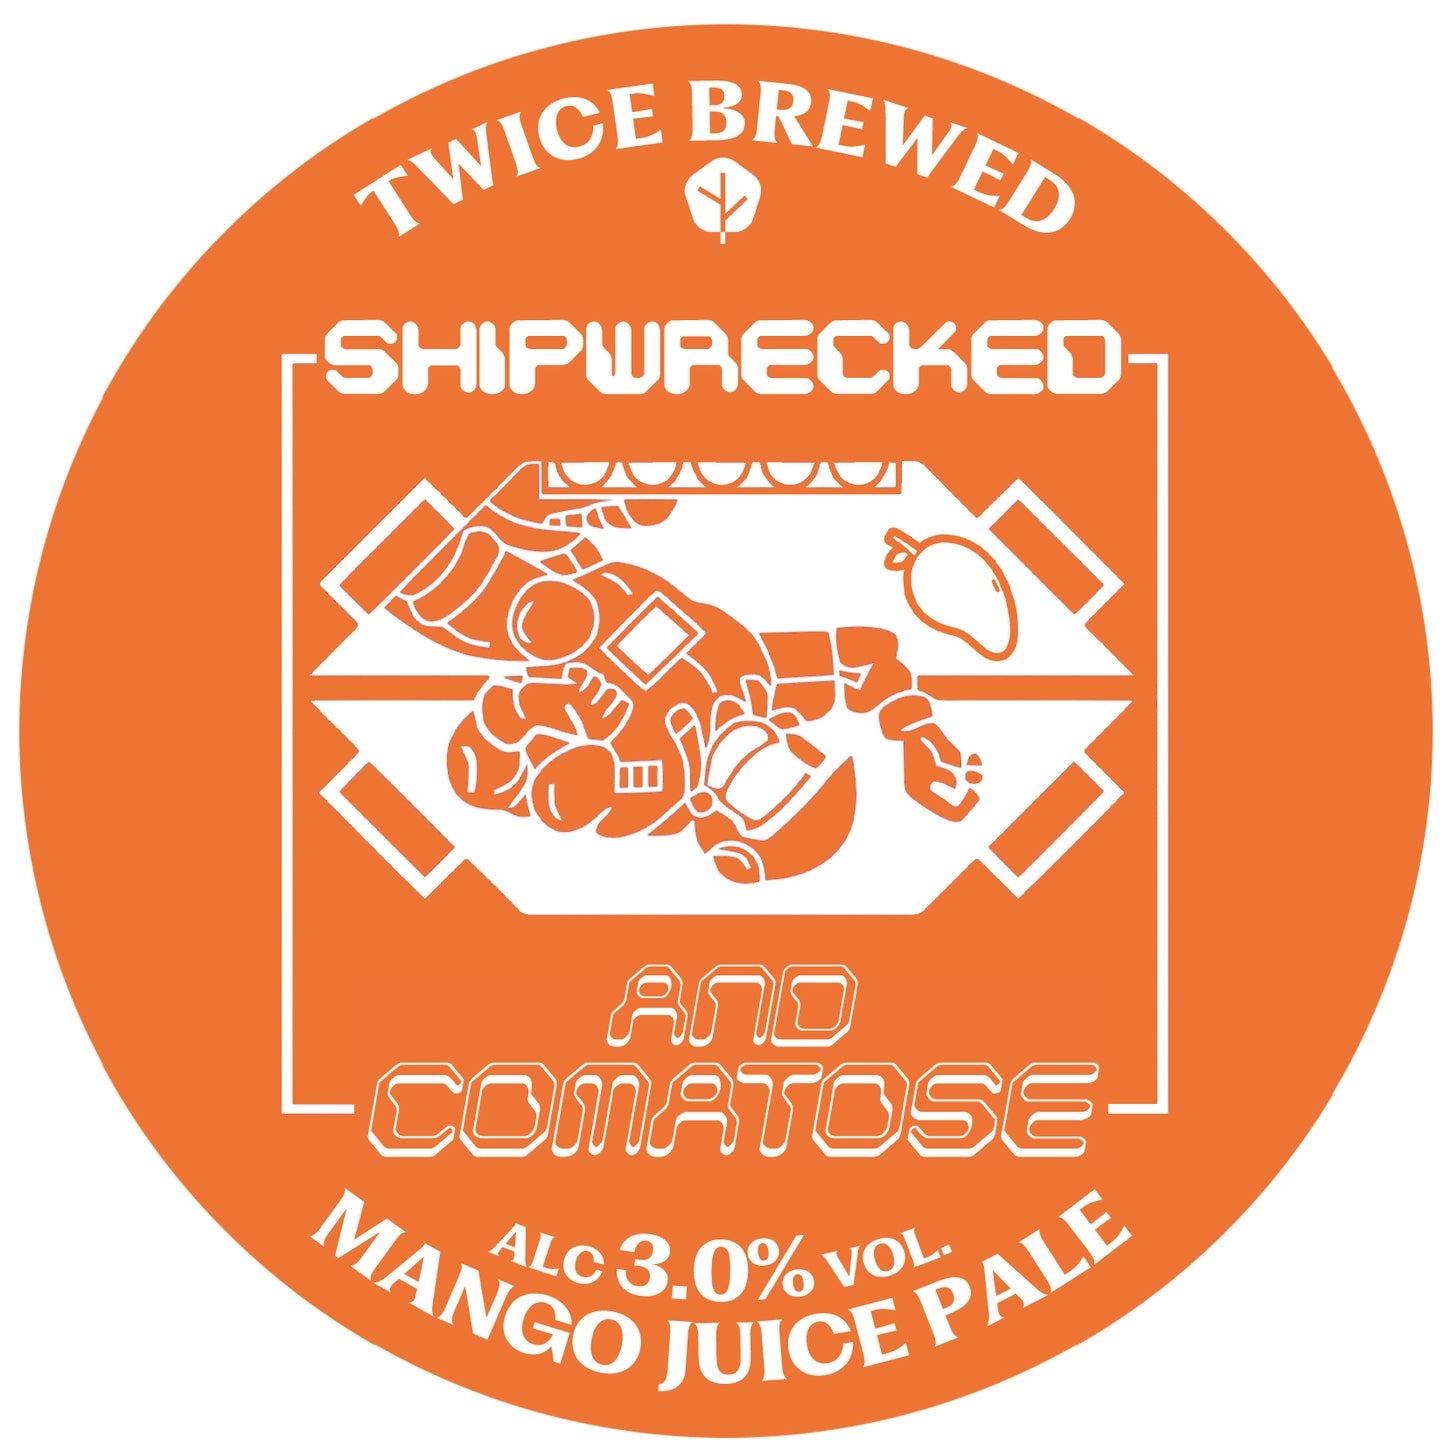 Shipwrecked & Comatose, Mango Juice Pale, 3.0% - 440ml can